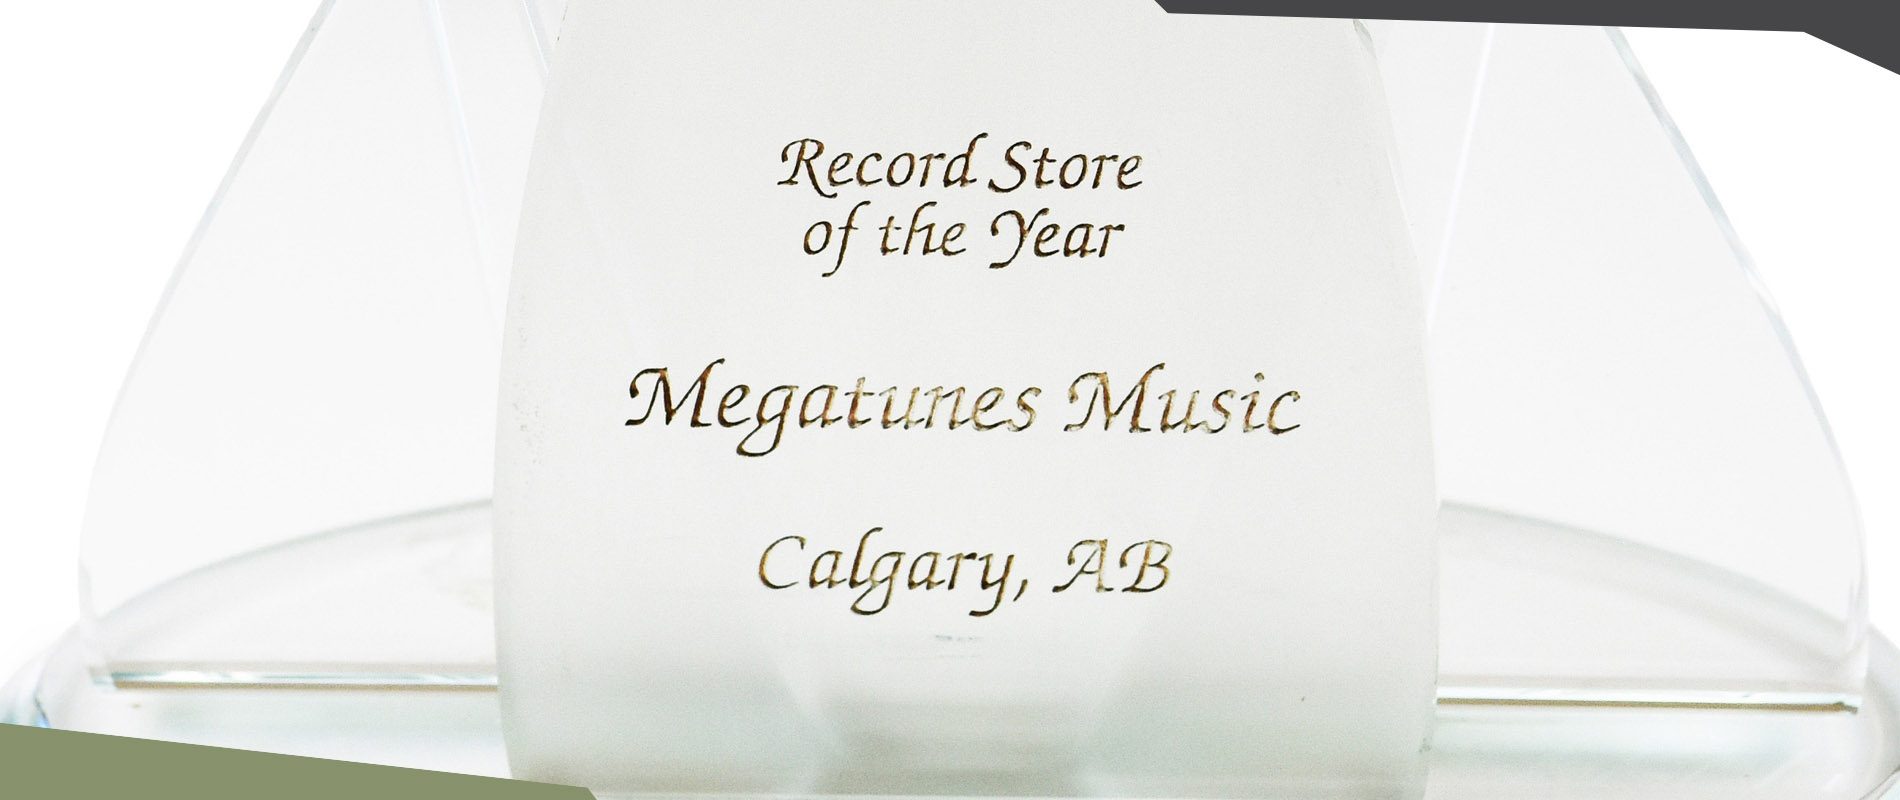 MEGATUNES MUSIC CCMA AWARD